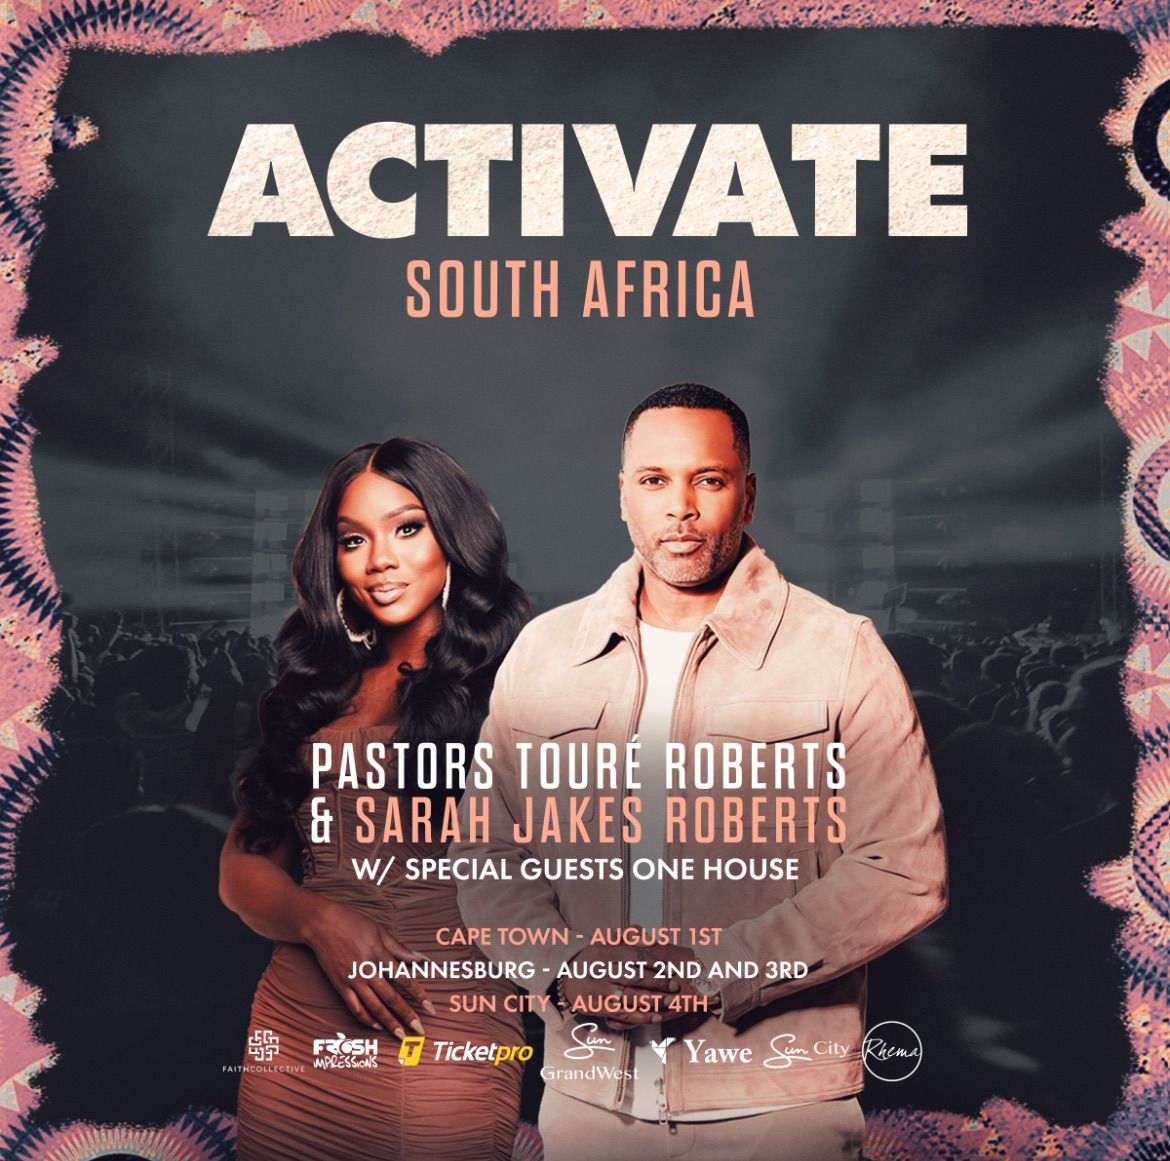 Sarah Jakes Roberts and Toure Roberts - ACTIVATE South Africa